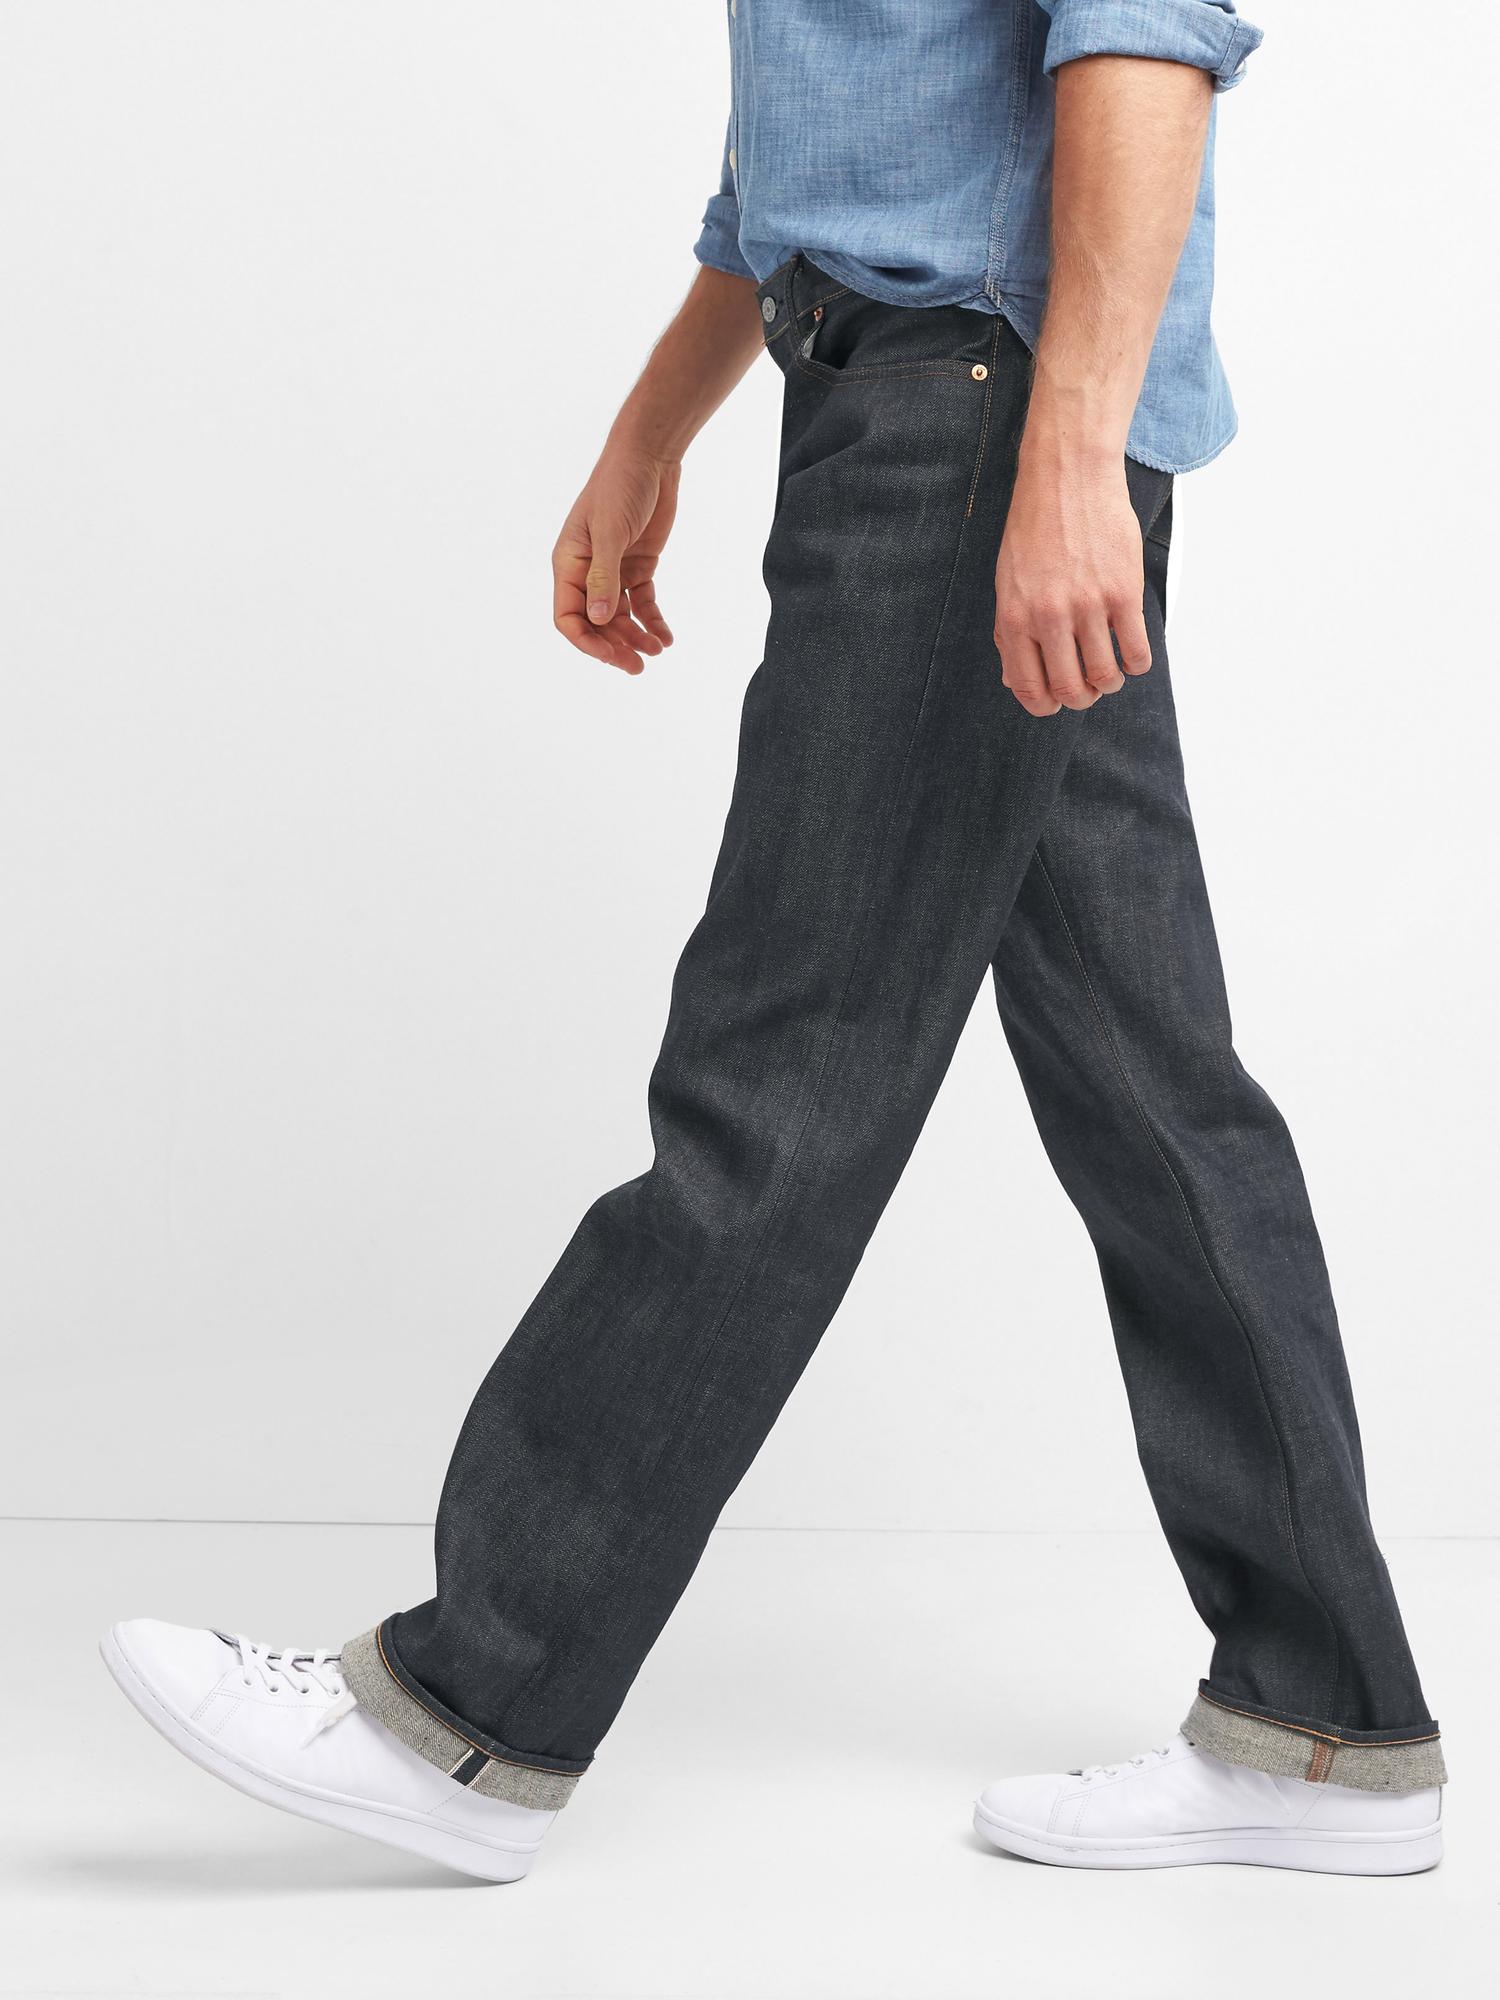 gap standard jeans